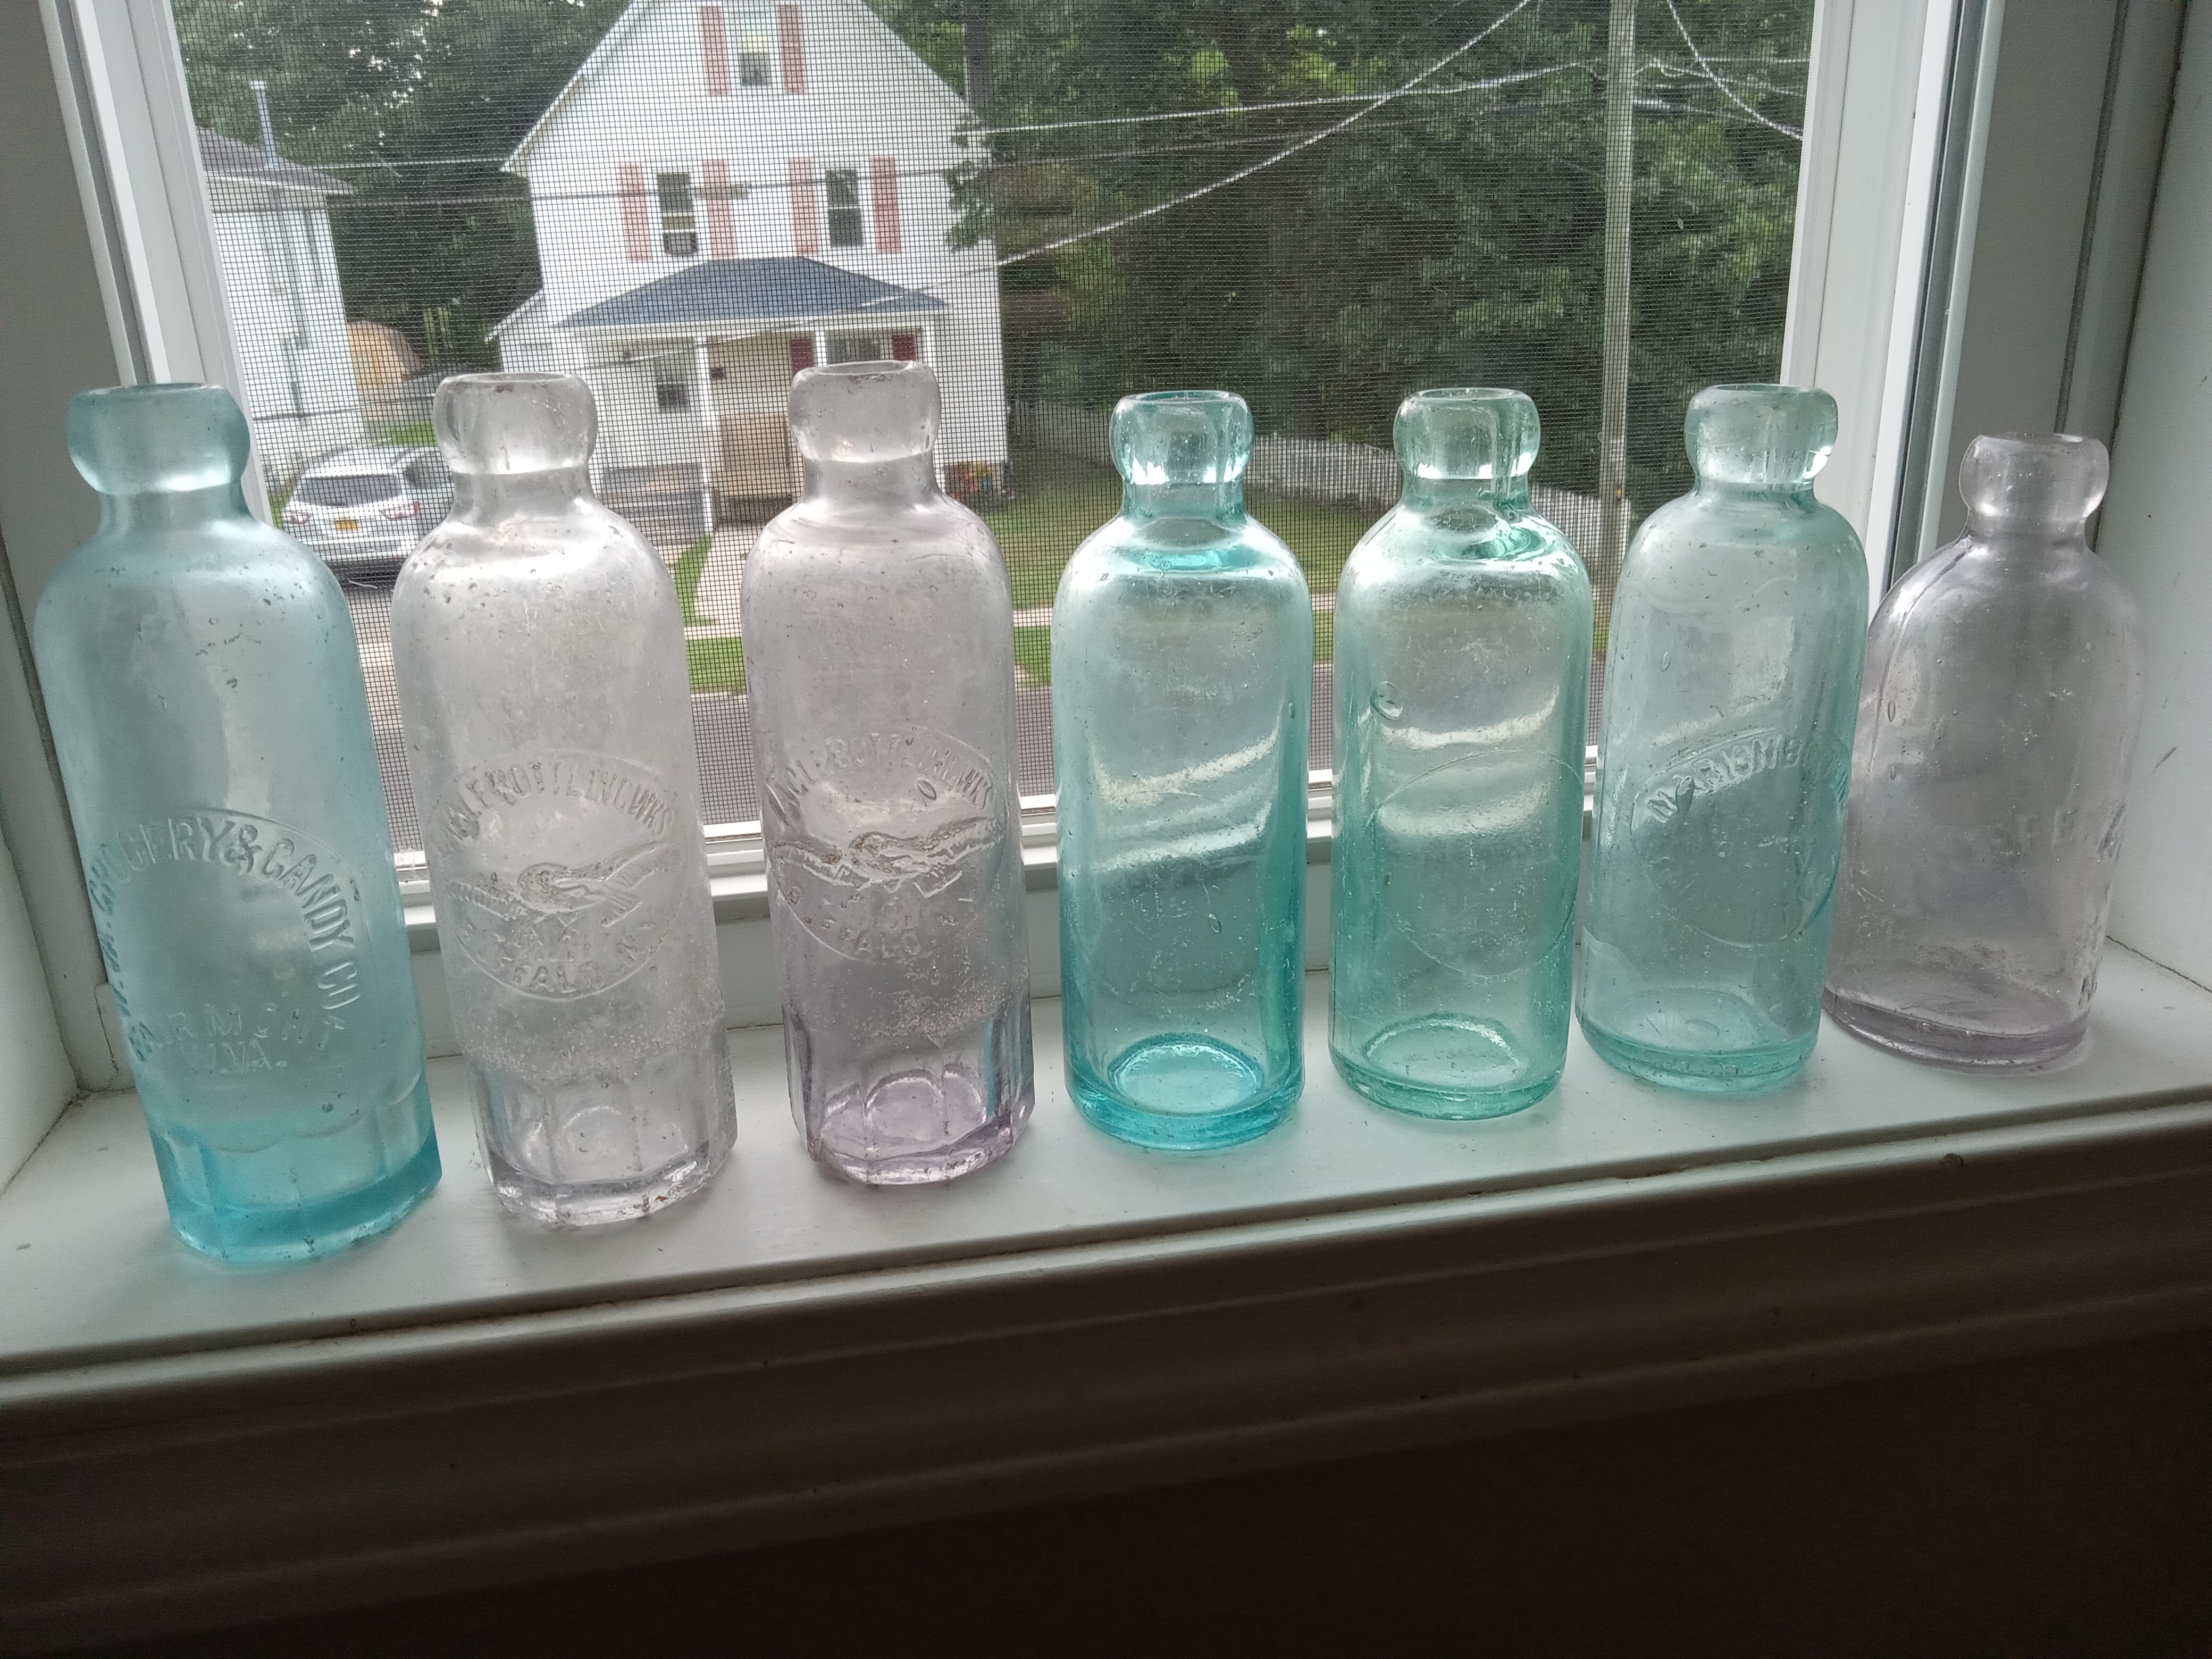 The seven Hutchinson bottles I've found